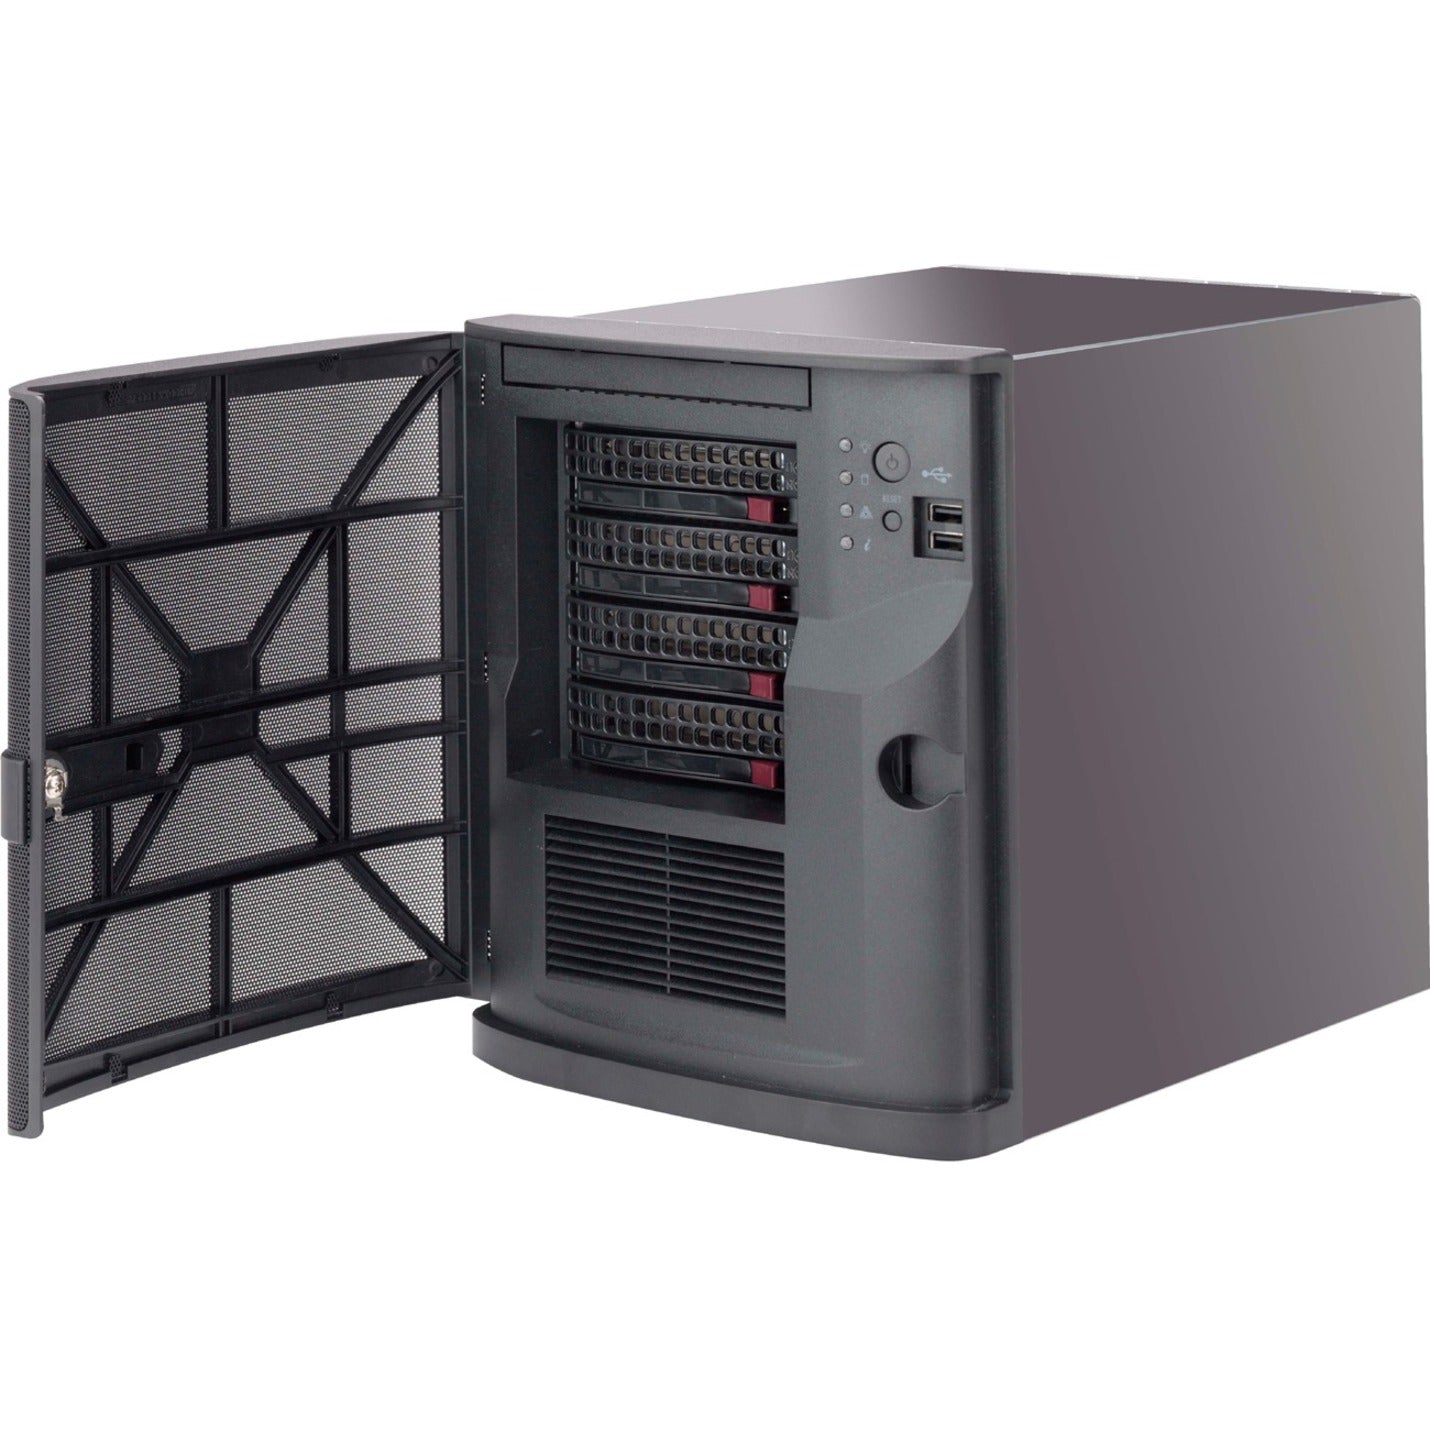 Supermicro CSE-721TQ-350B2 SuperChassis 721TQ-350B2 Server Case, Mini-tower, 4x 3.5" Bays, 2x 2.5" Bays, 1x 5.25" Bay, 1x Expansion Slot, 350W Power Supply